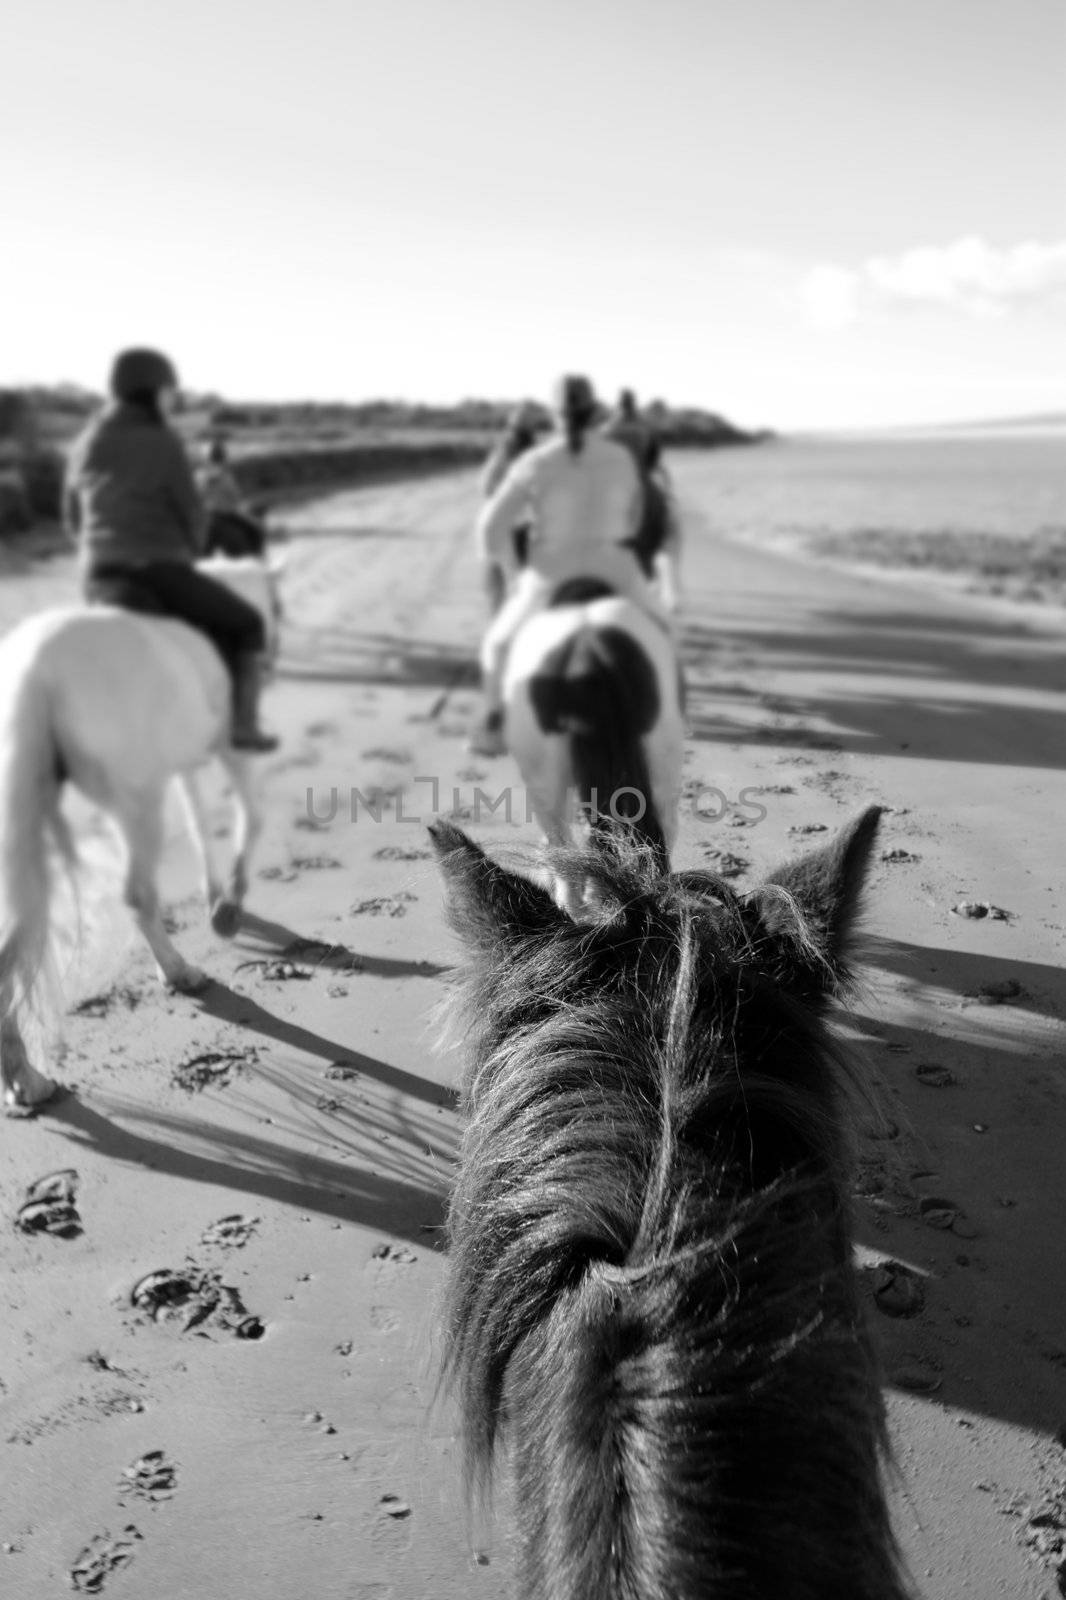 pony trekking on a sandy beach by morrbyte